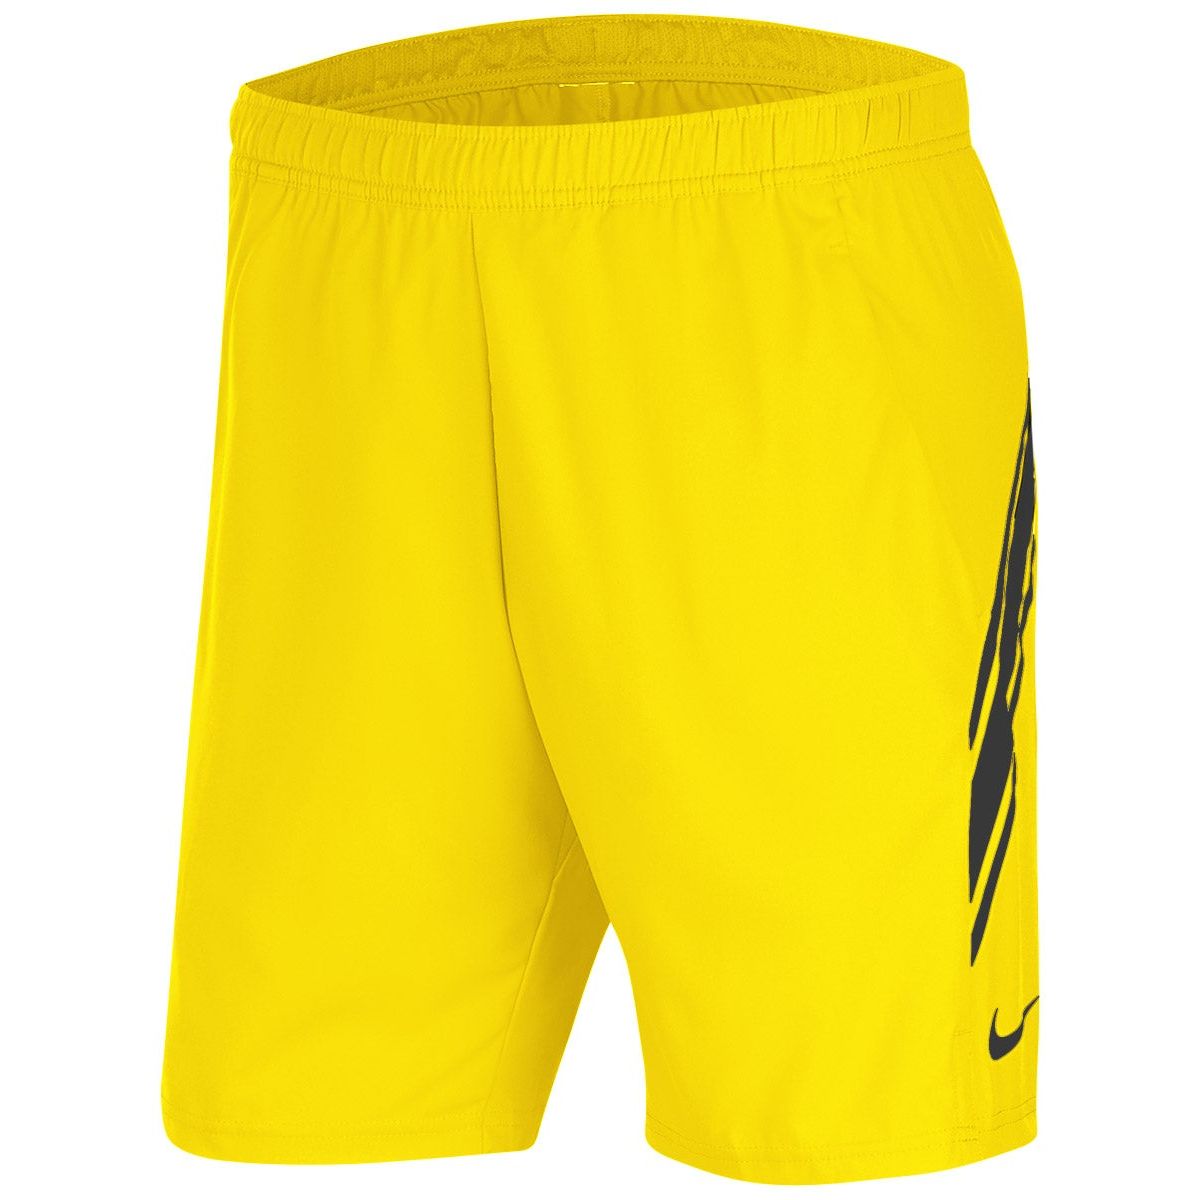 NikeCourt Dry 9-inch Men's Tennis Shorts 939265-731